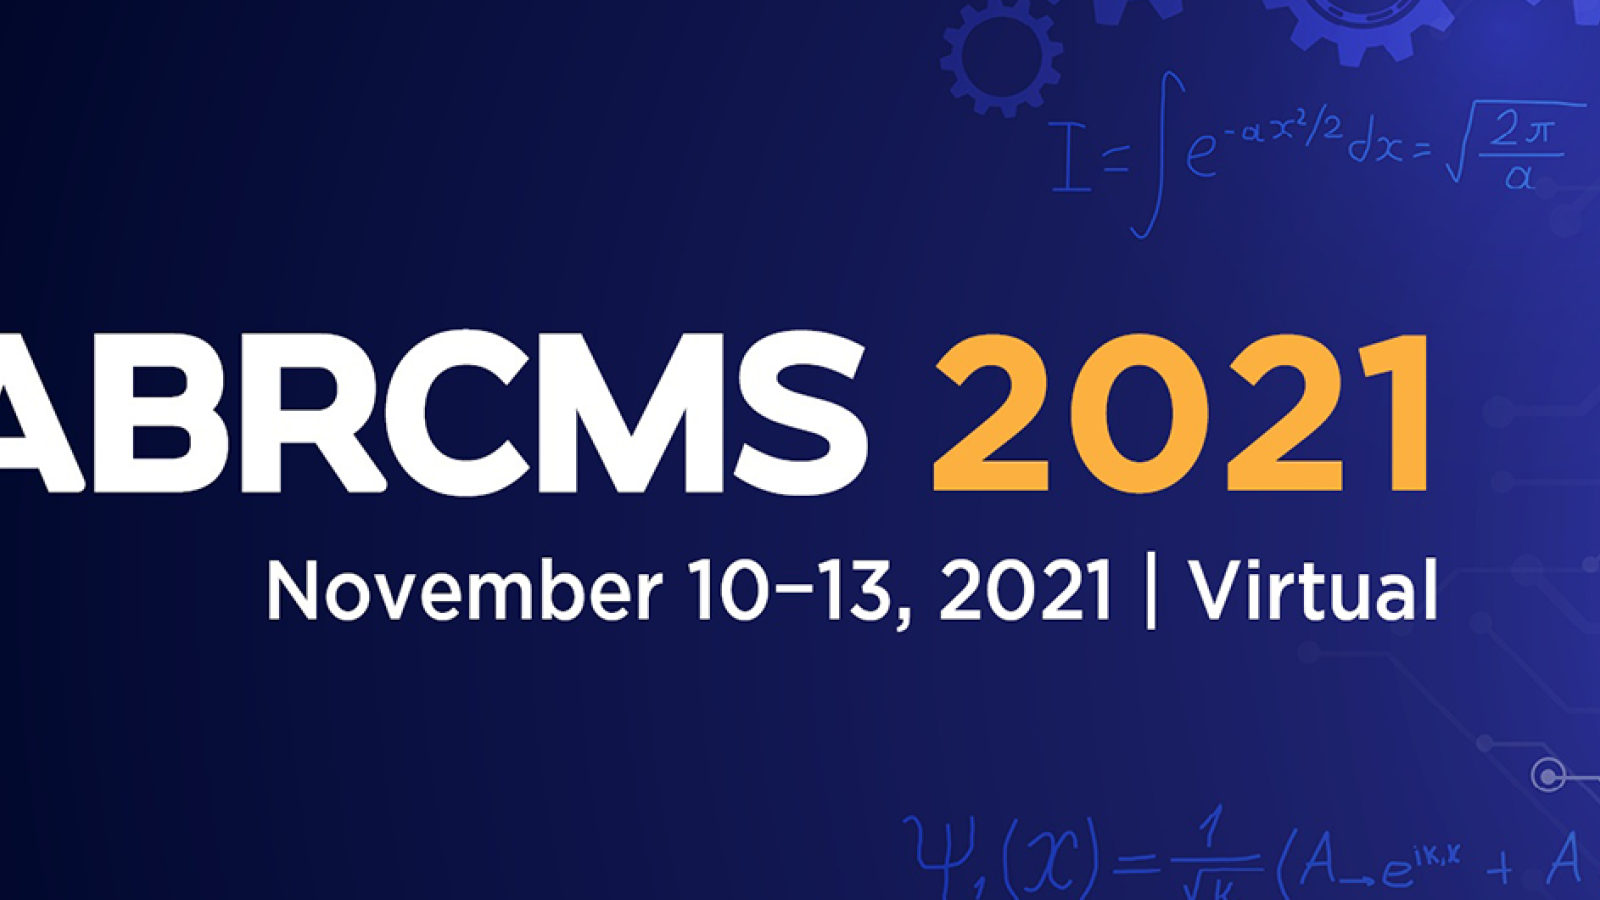 ABRCMS 2021. November 10-13, 2021. Virtual